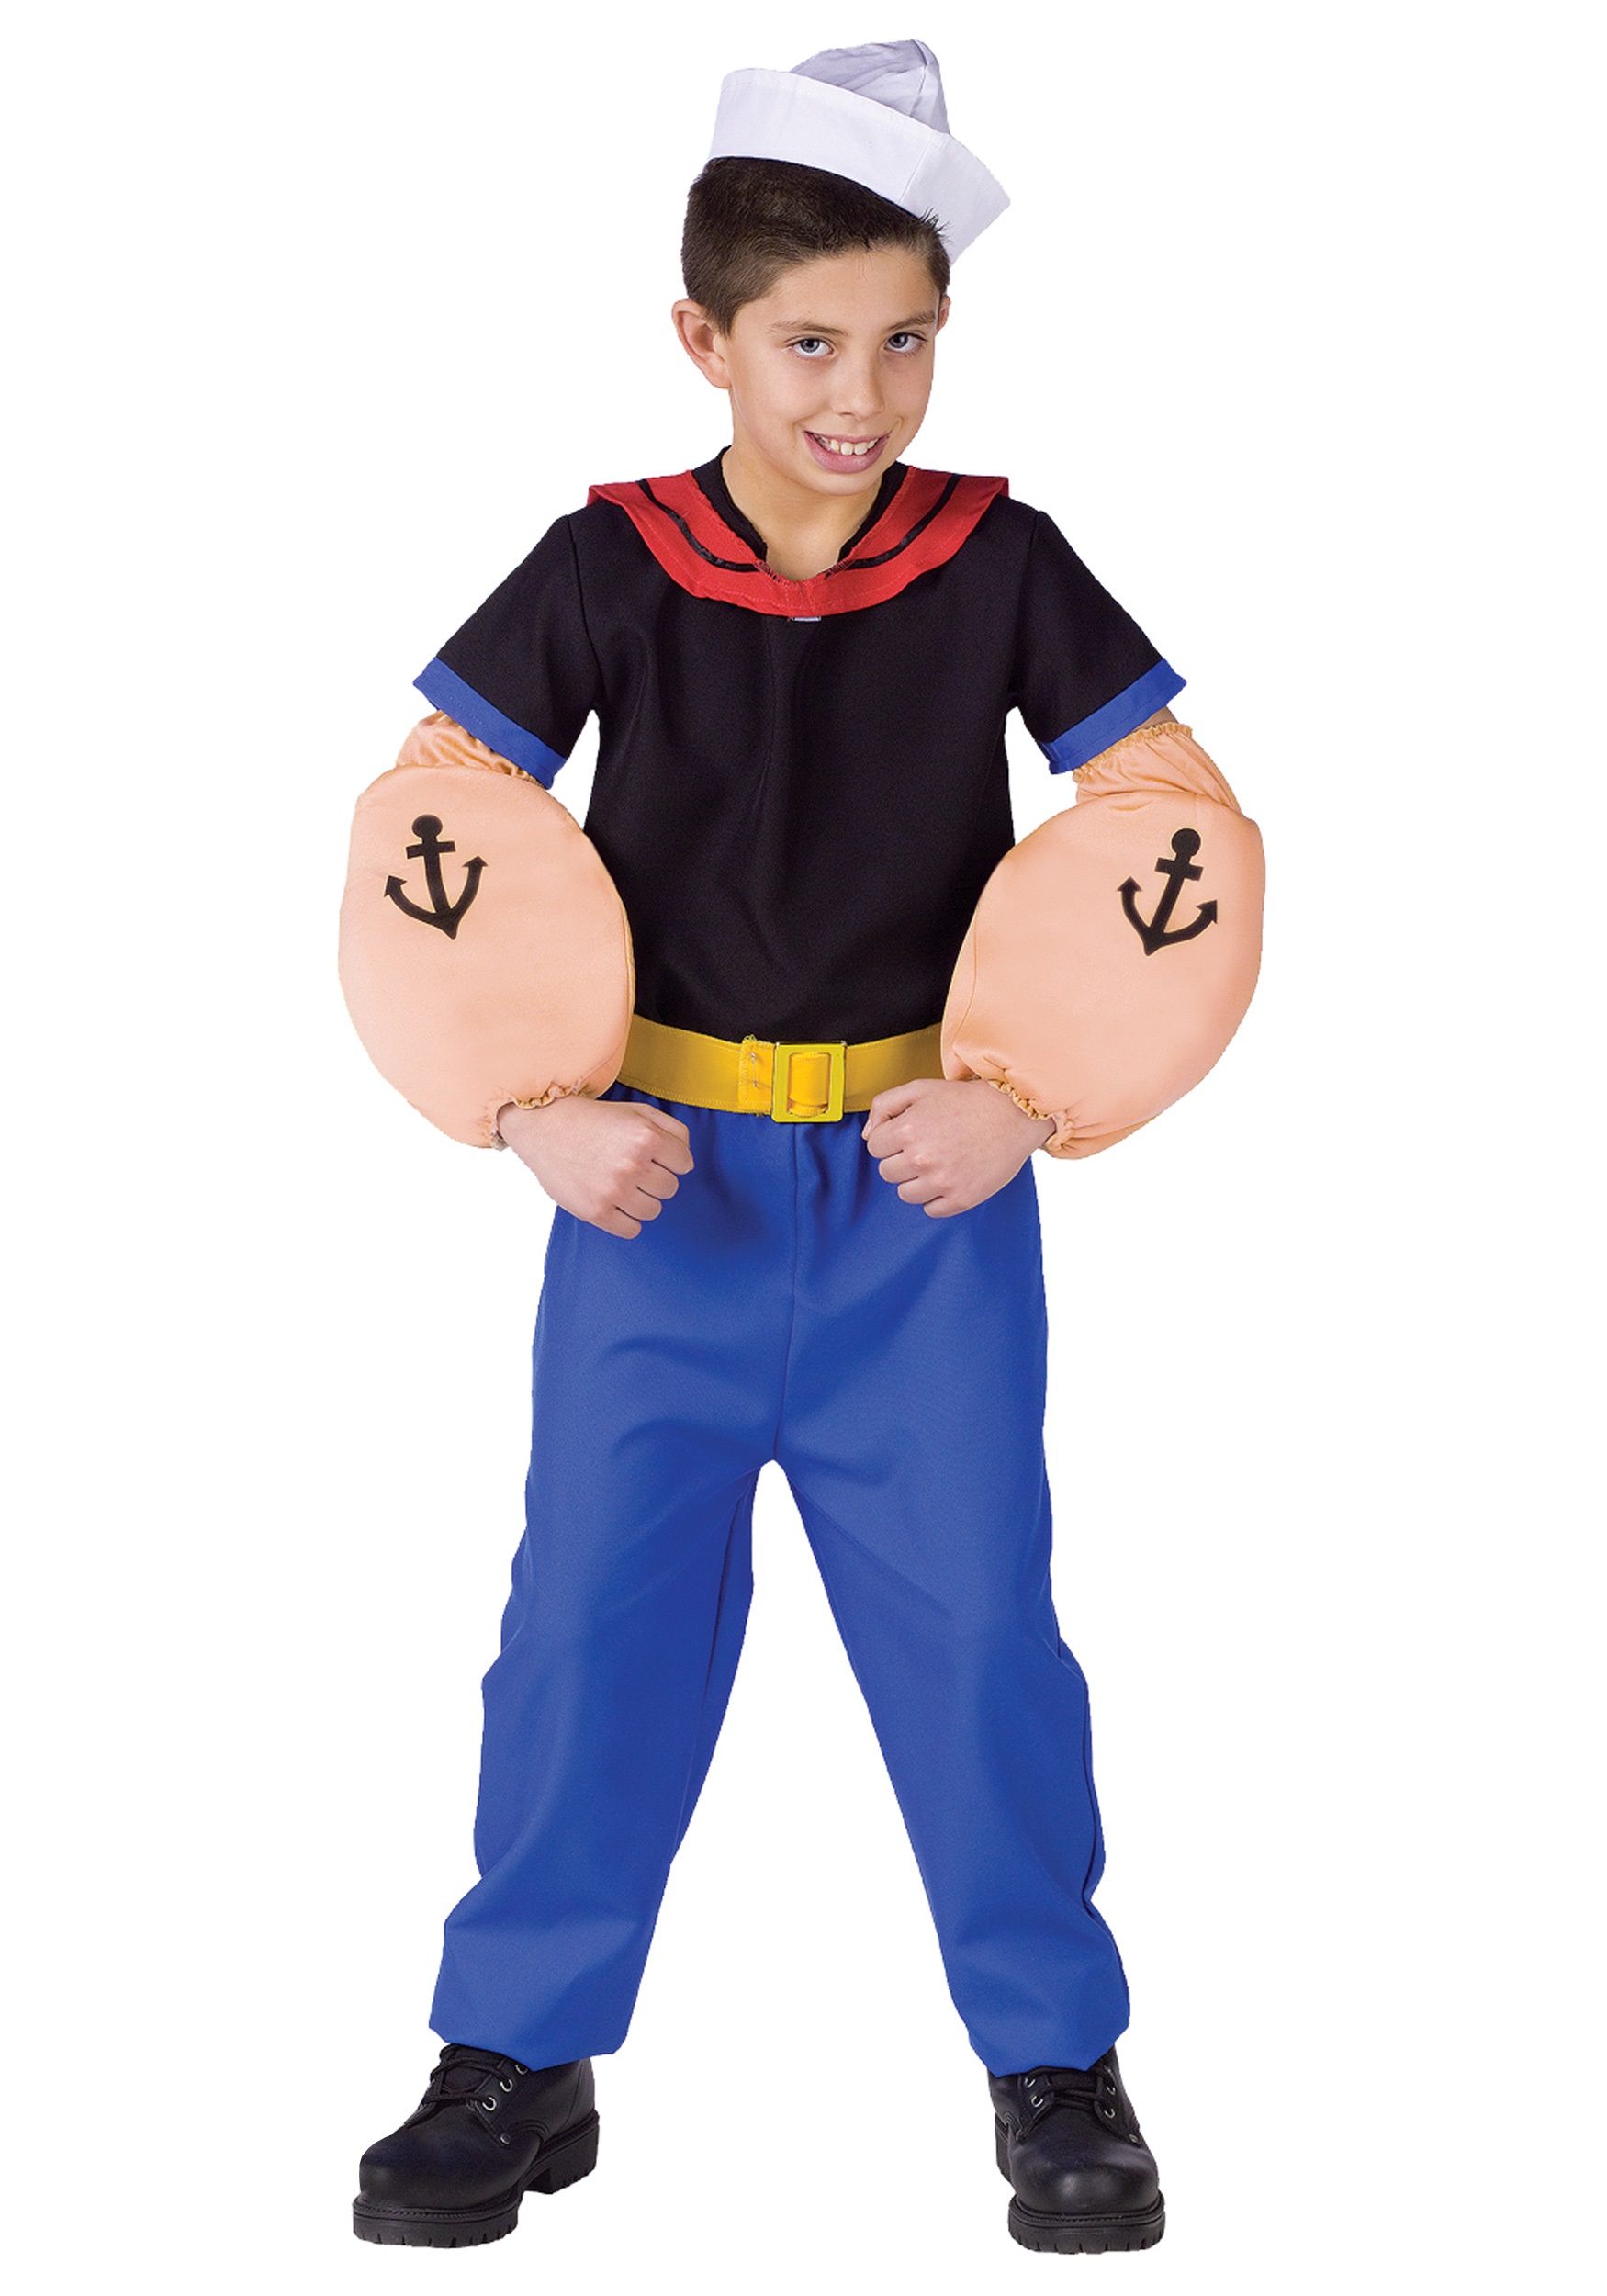 Photos - Fancy Dress Fun World Popeye the Sailor Kid's Costume | Popeye Costumes Pink/Black